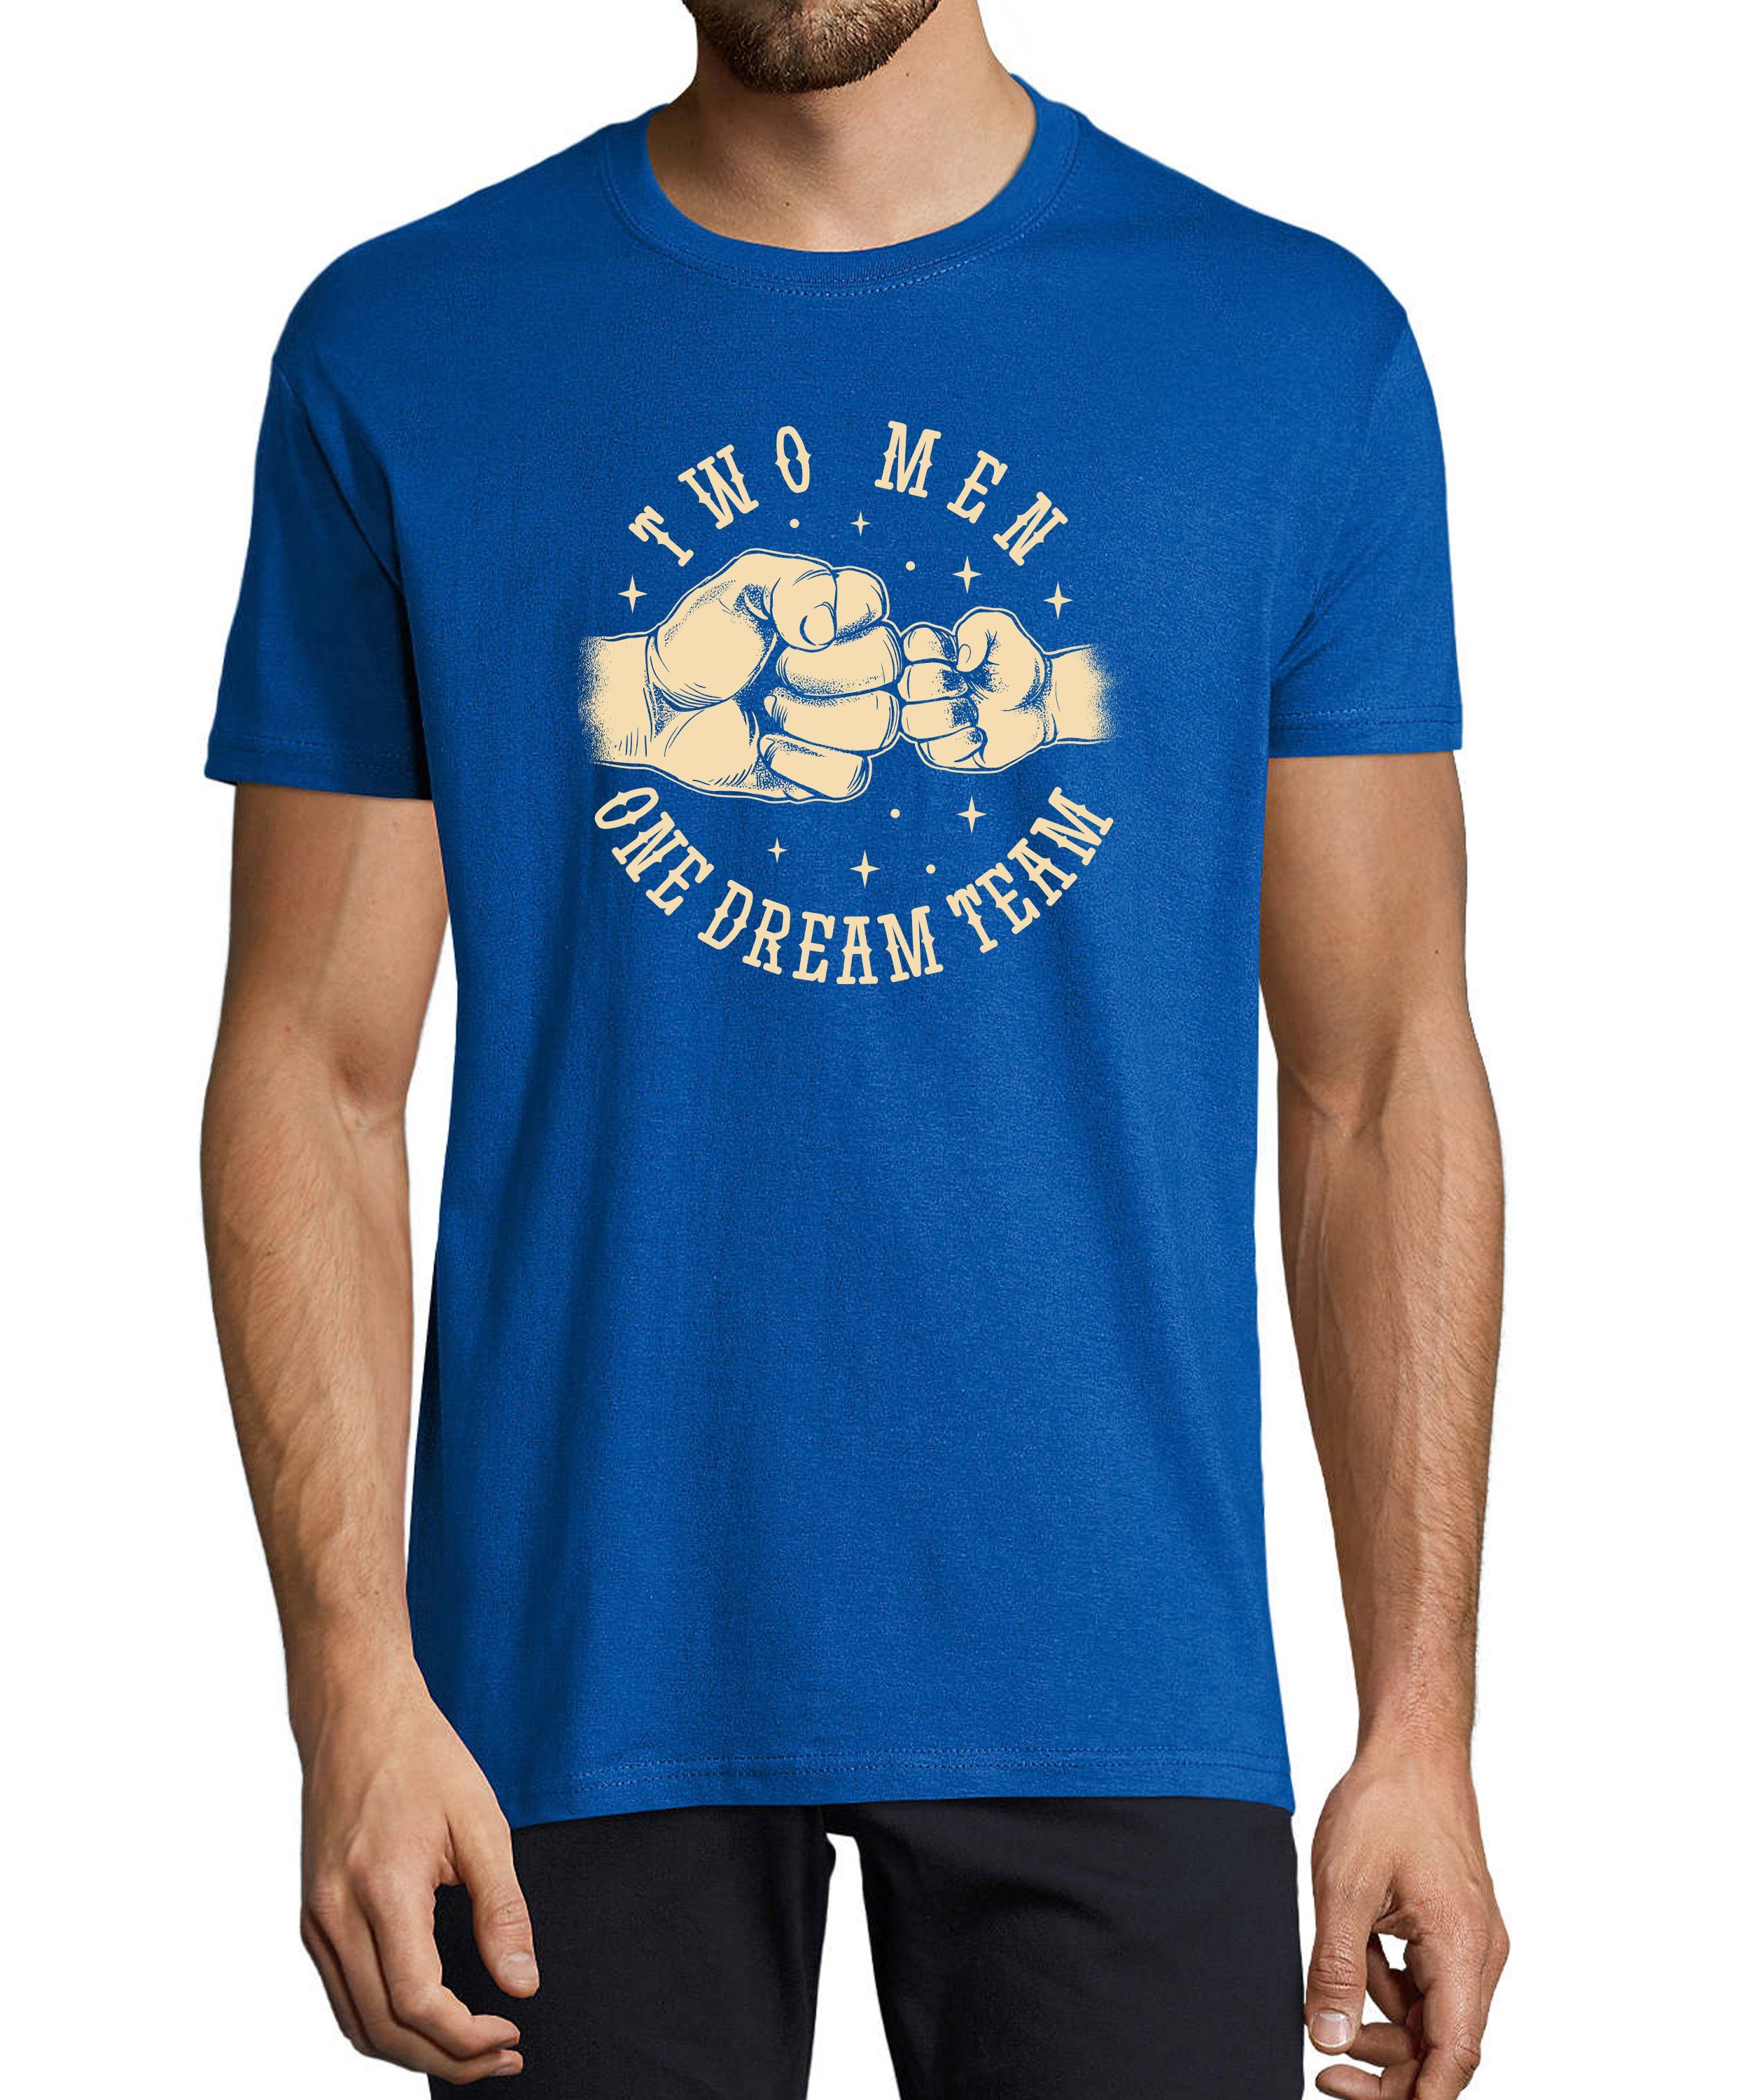 MyDesign24 T-Shirt Herren Print Shirt - Vater mit Sohn Dream Team Baumwollshirt mit Aufdruck Regular Fit, i306 royal blau